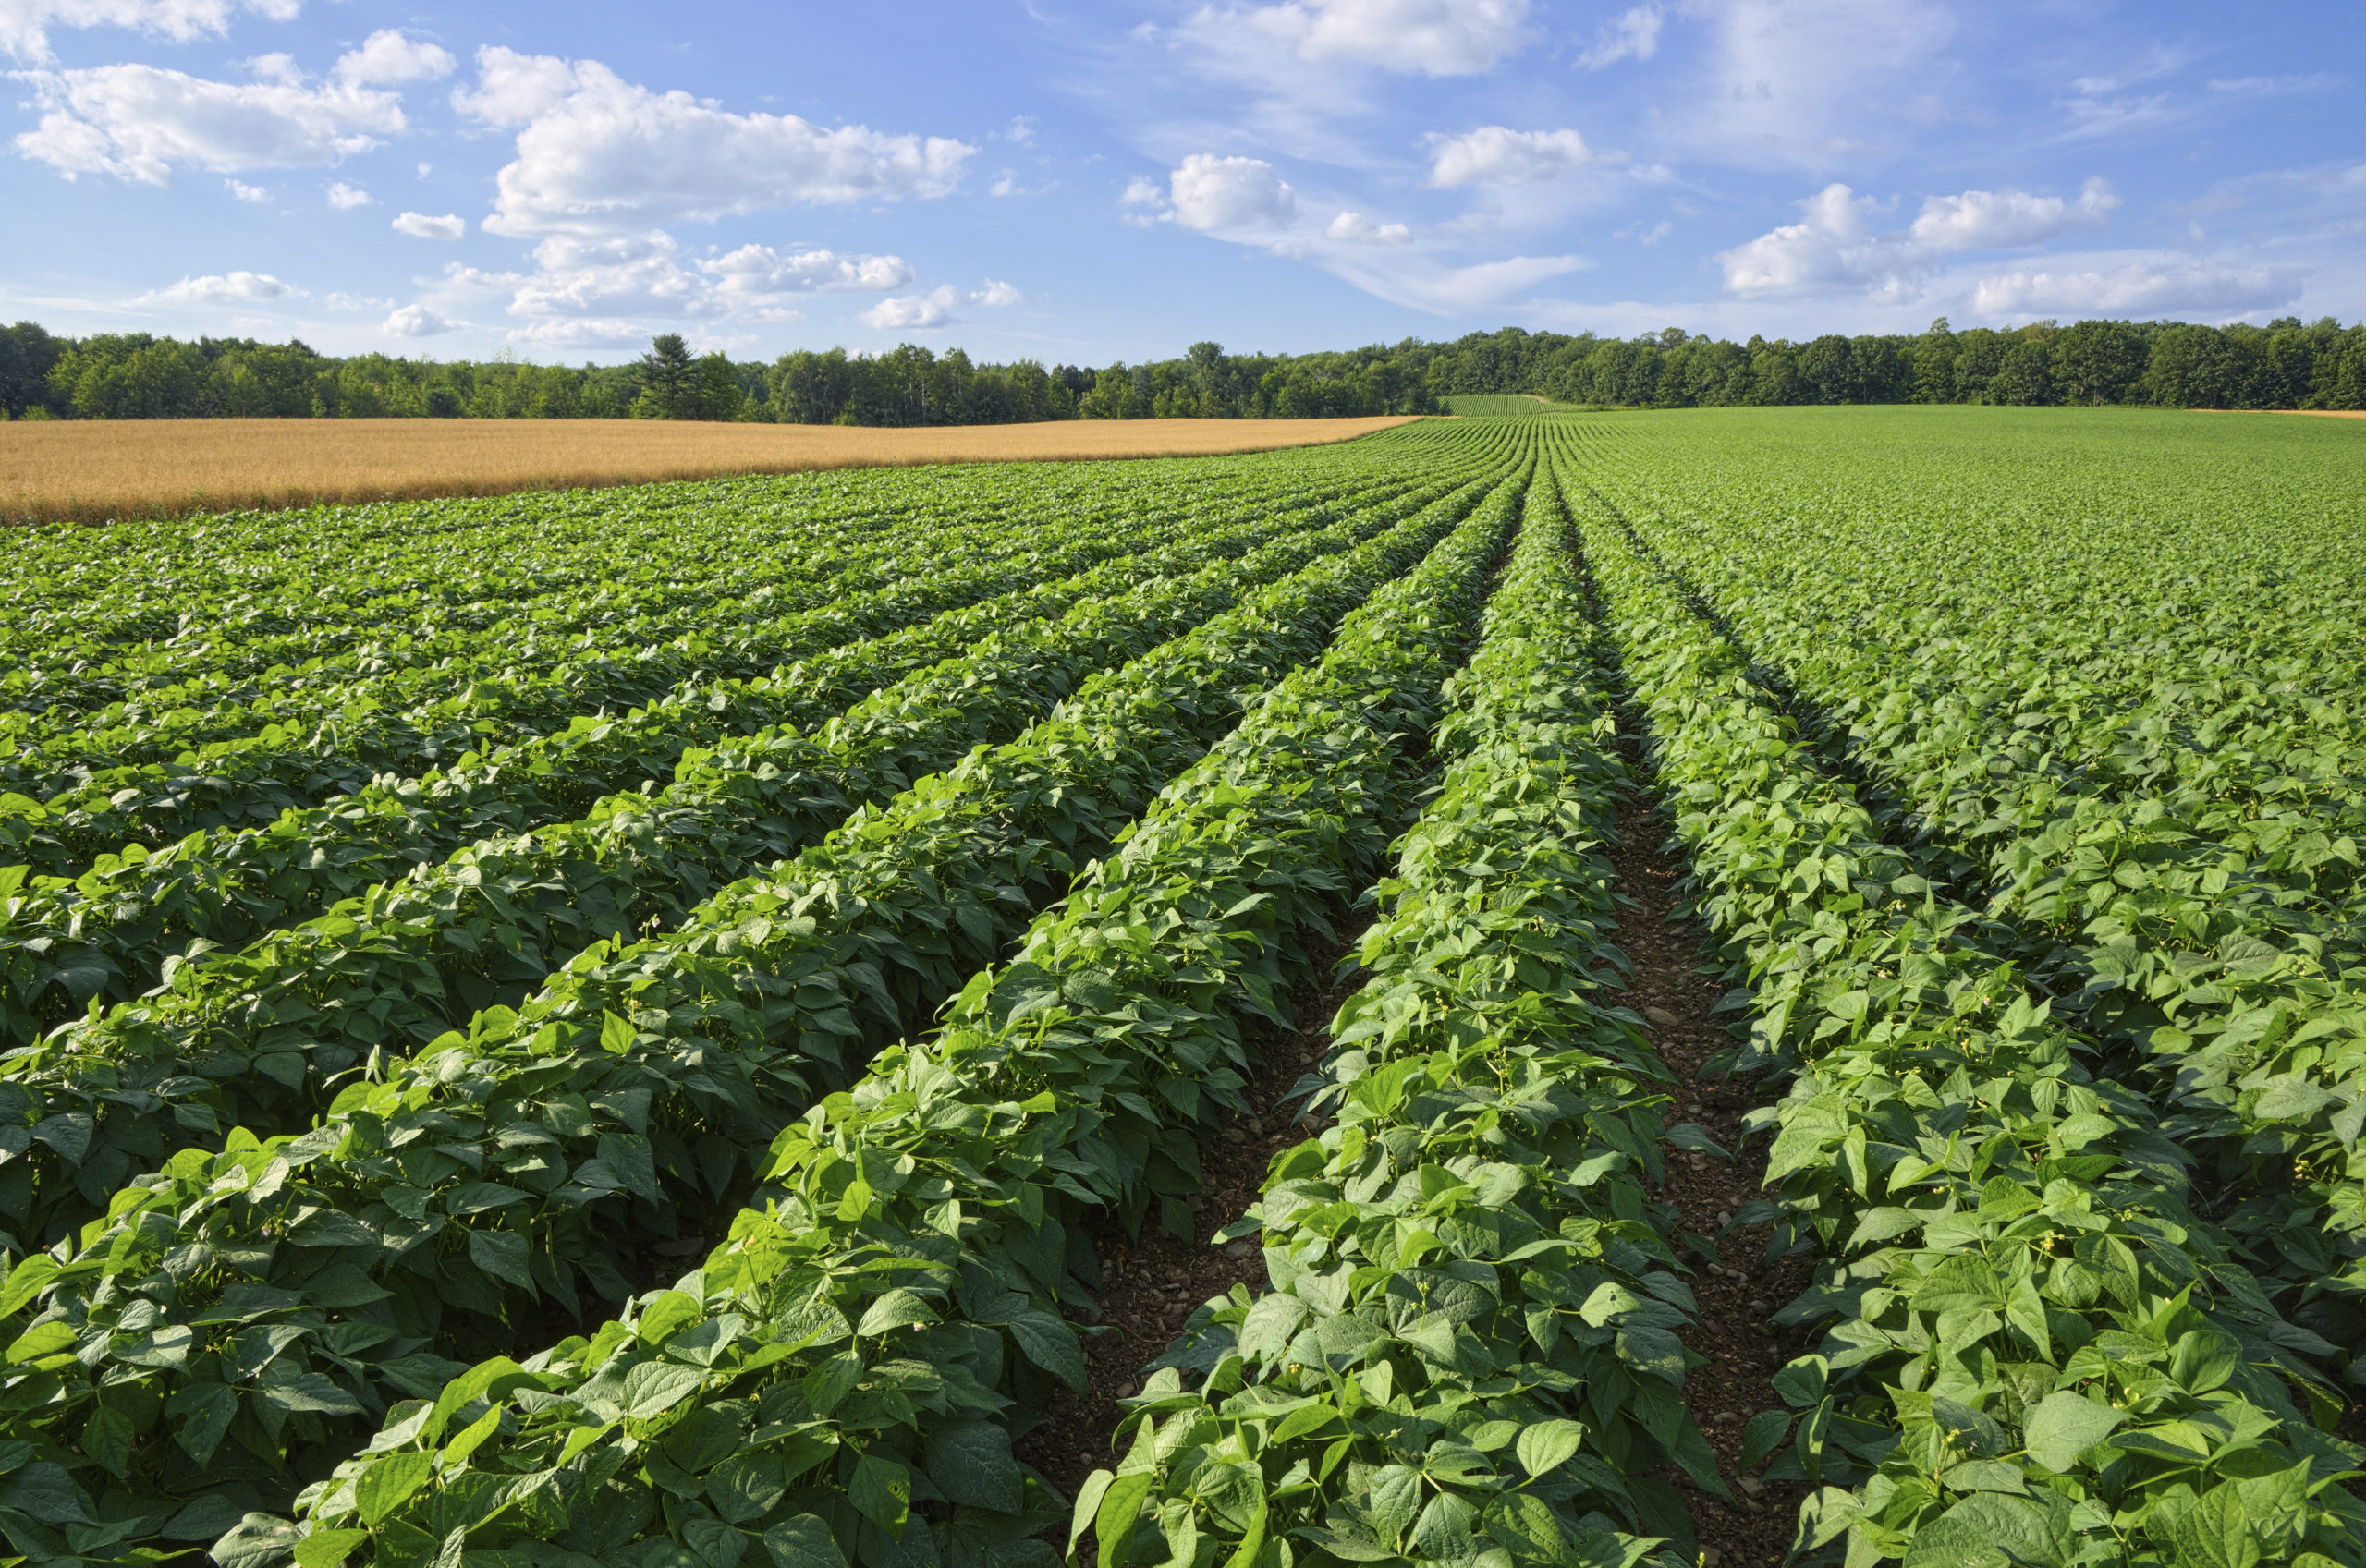 Image of potato field